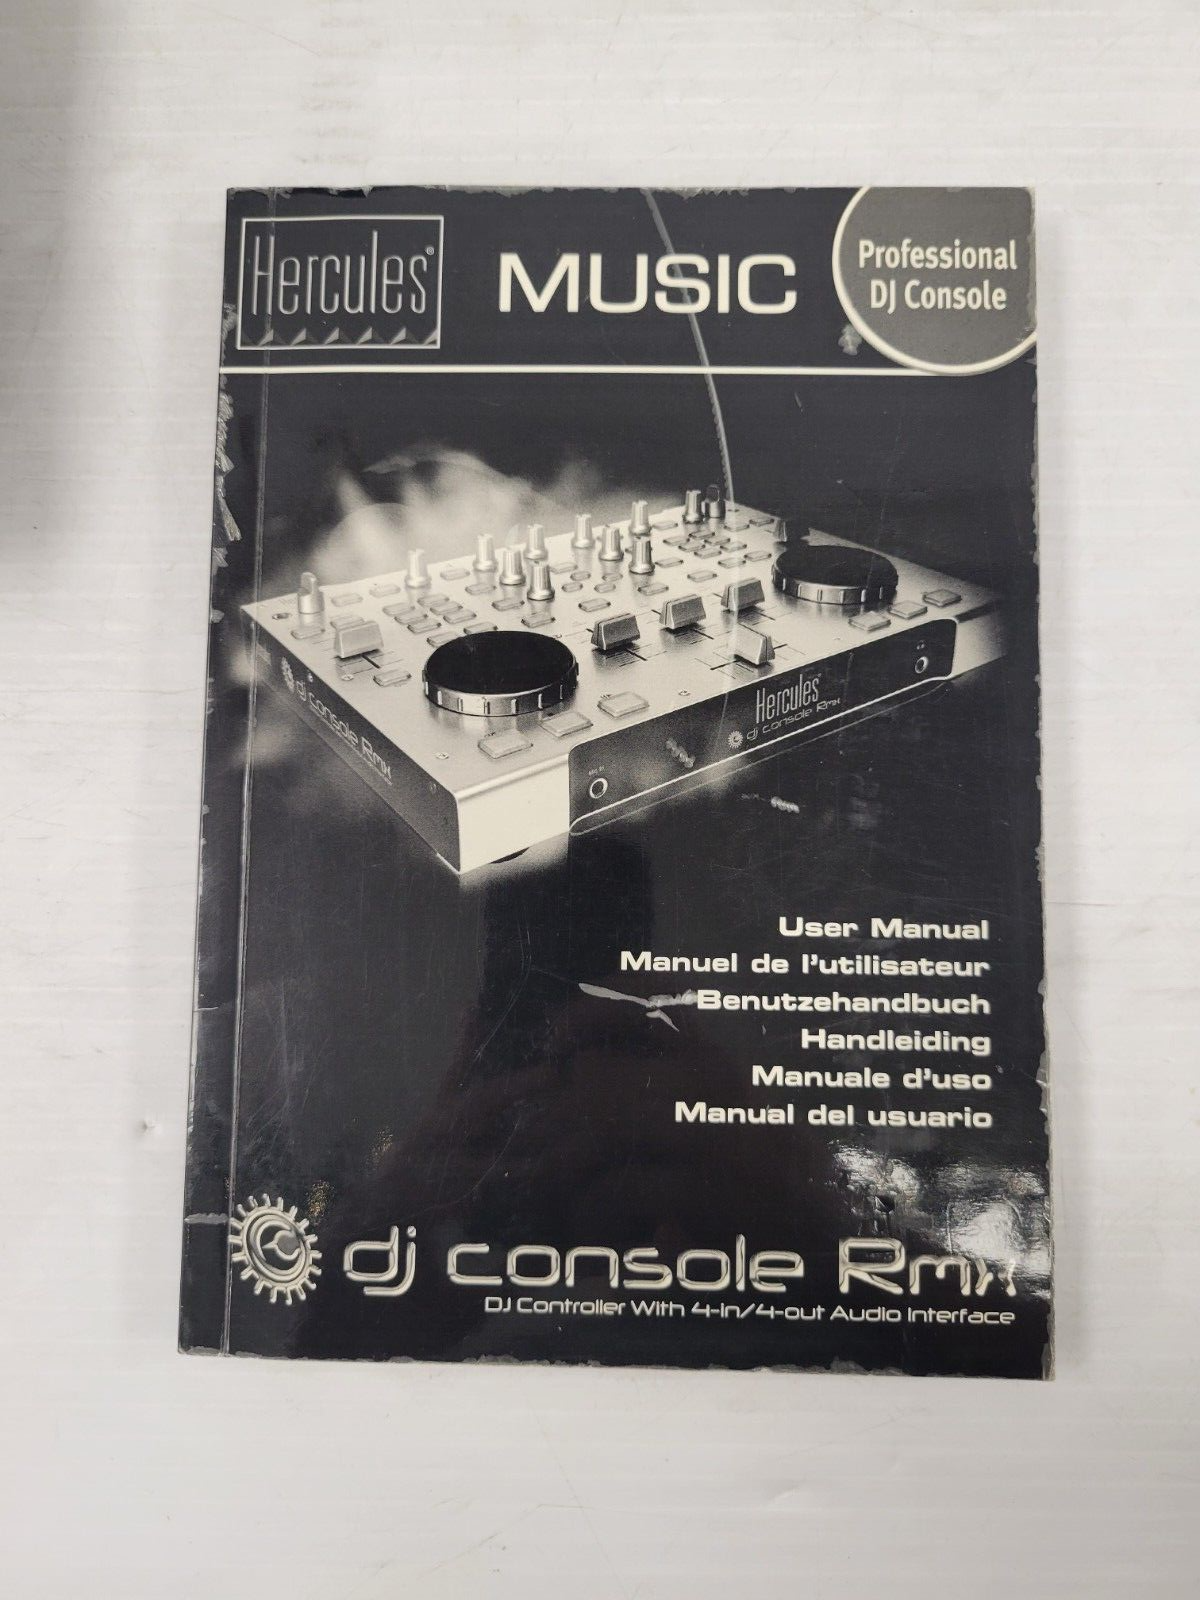 (51908-3) Hercules RMX DJ Controller